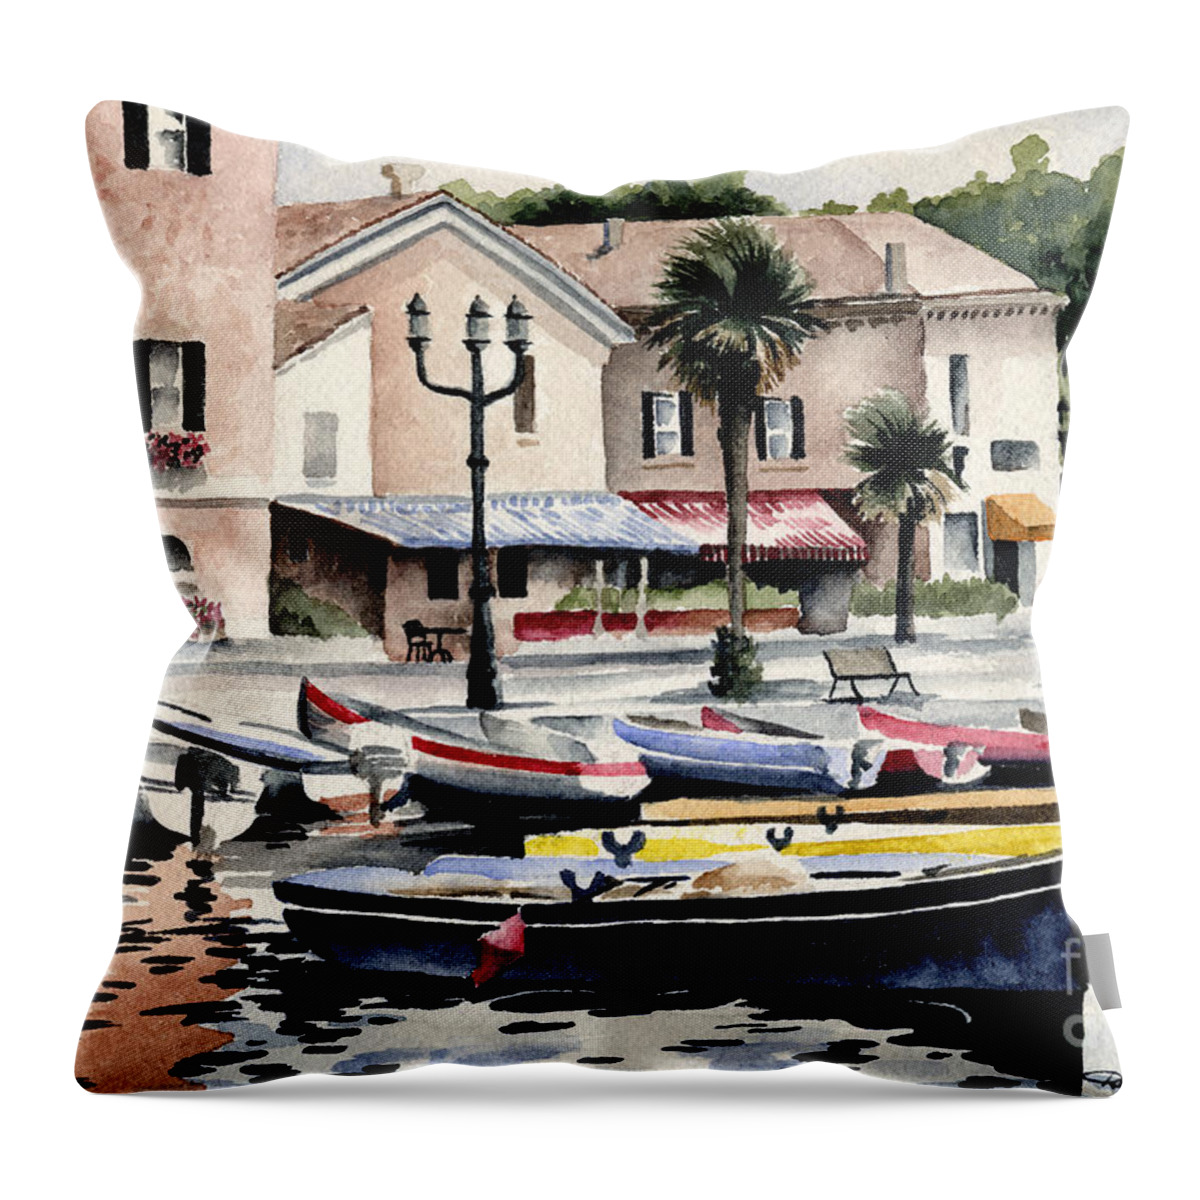 Bardolino Throw Pillow featuring the painting Bardolino Harbor by David Rogers